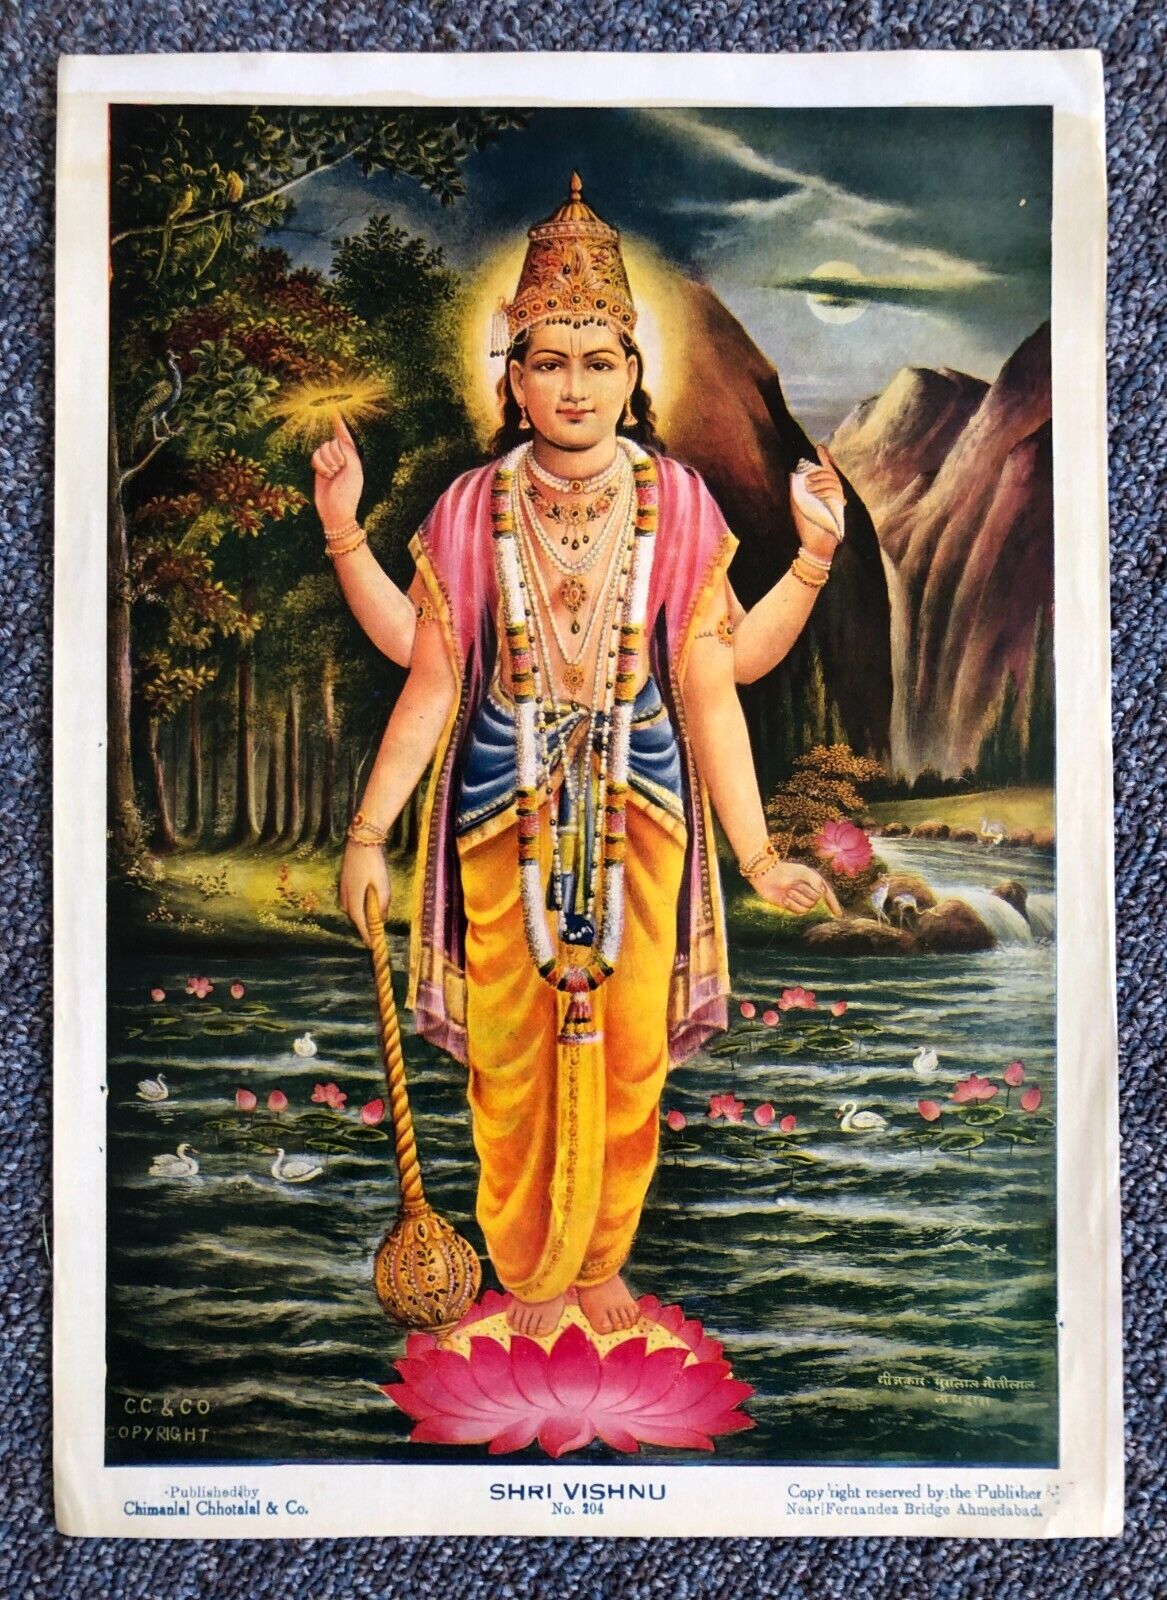 (1025) Rare Antique Hindu Art Print from India, c. 1940s: Lord Vishnu